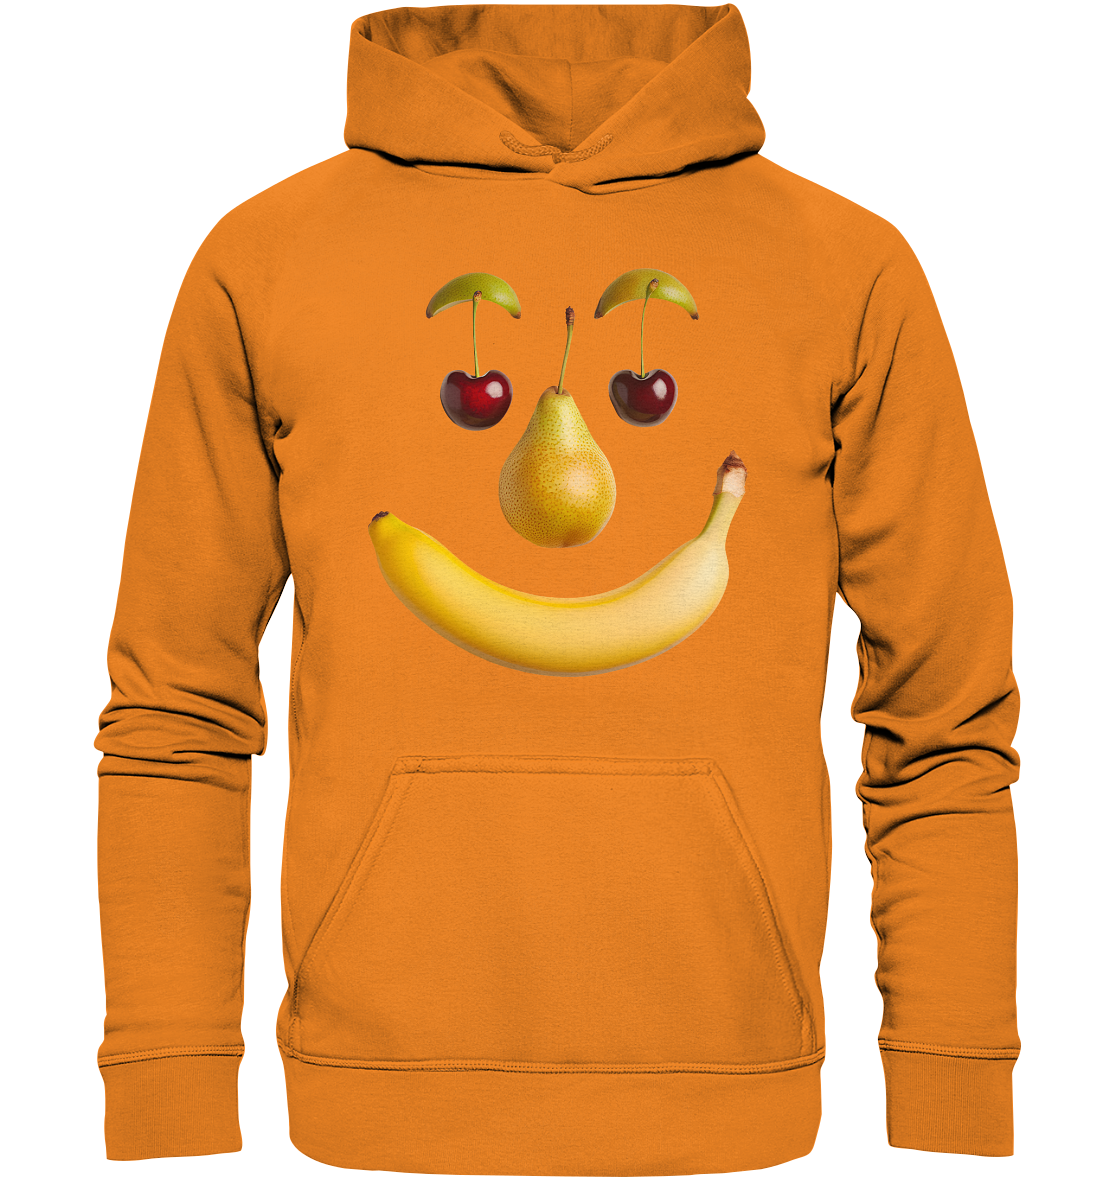 The Smiley Fruit  - Basic Unisex Hoodie